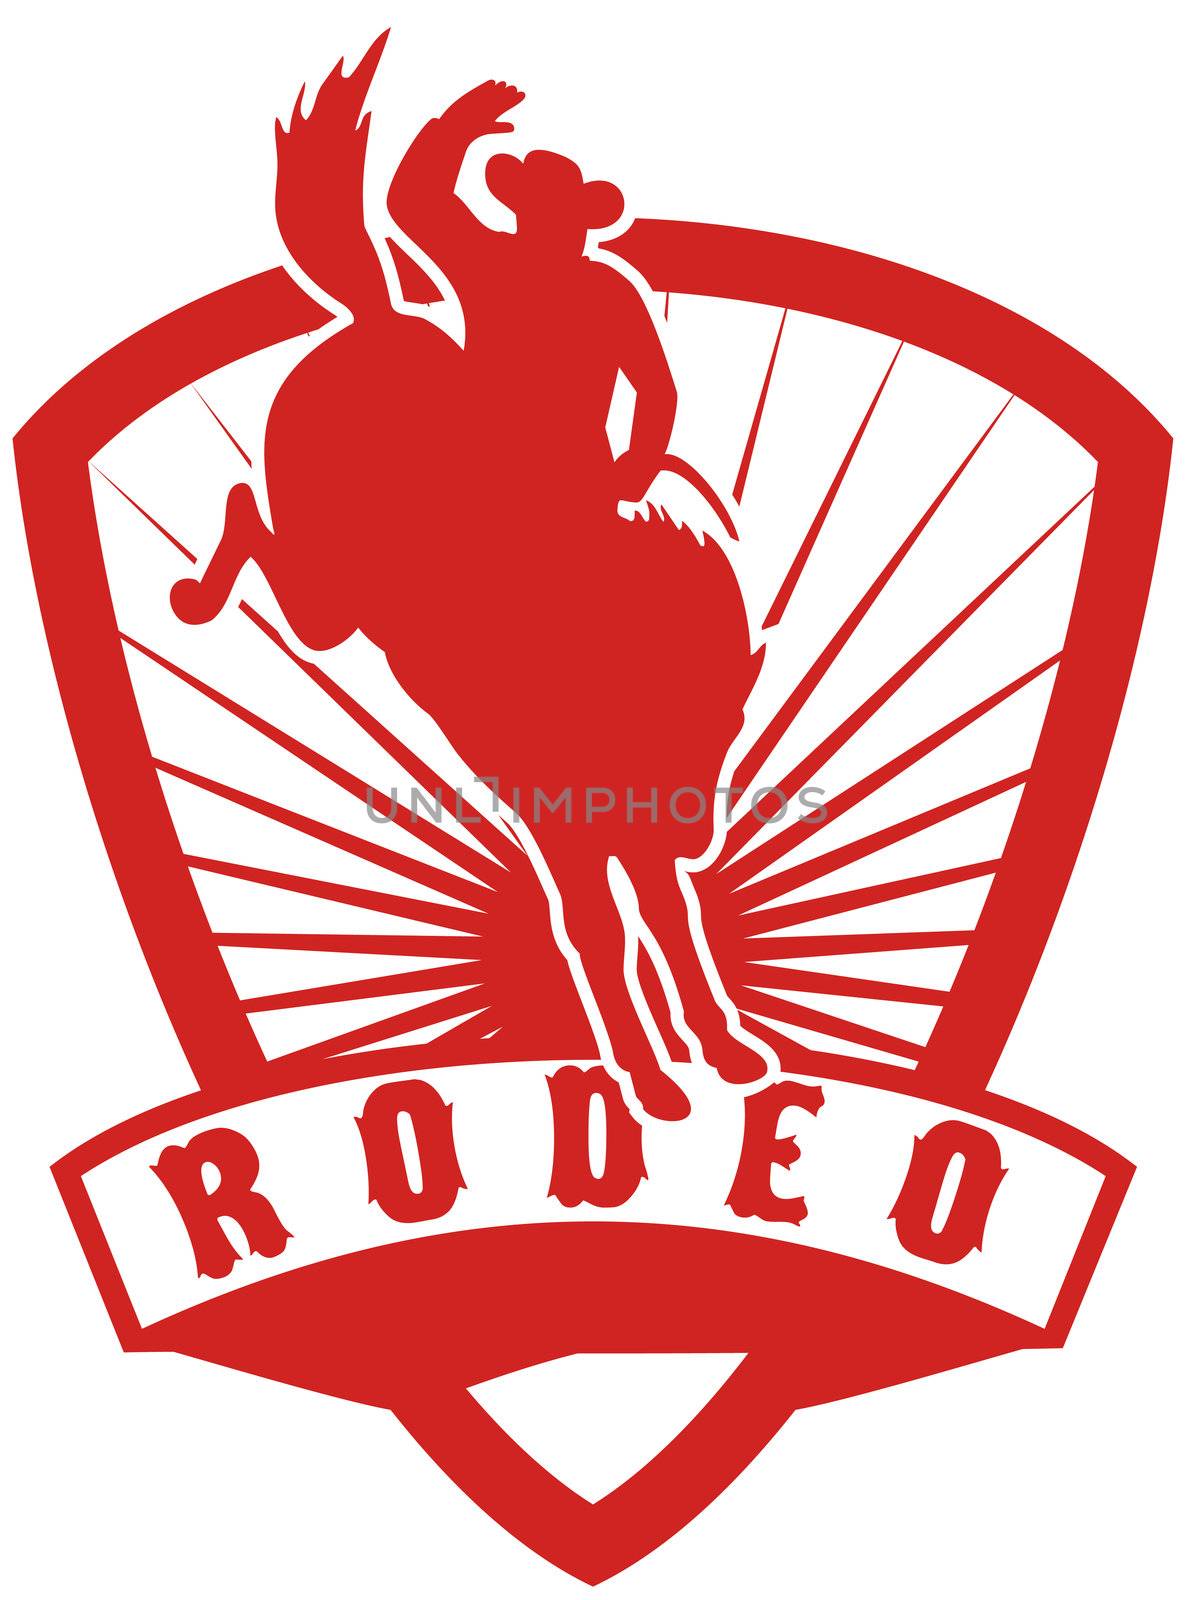 Rodeo Cowboy bucking bronco by patrimonio